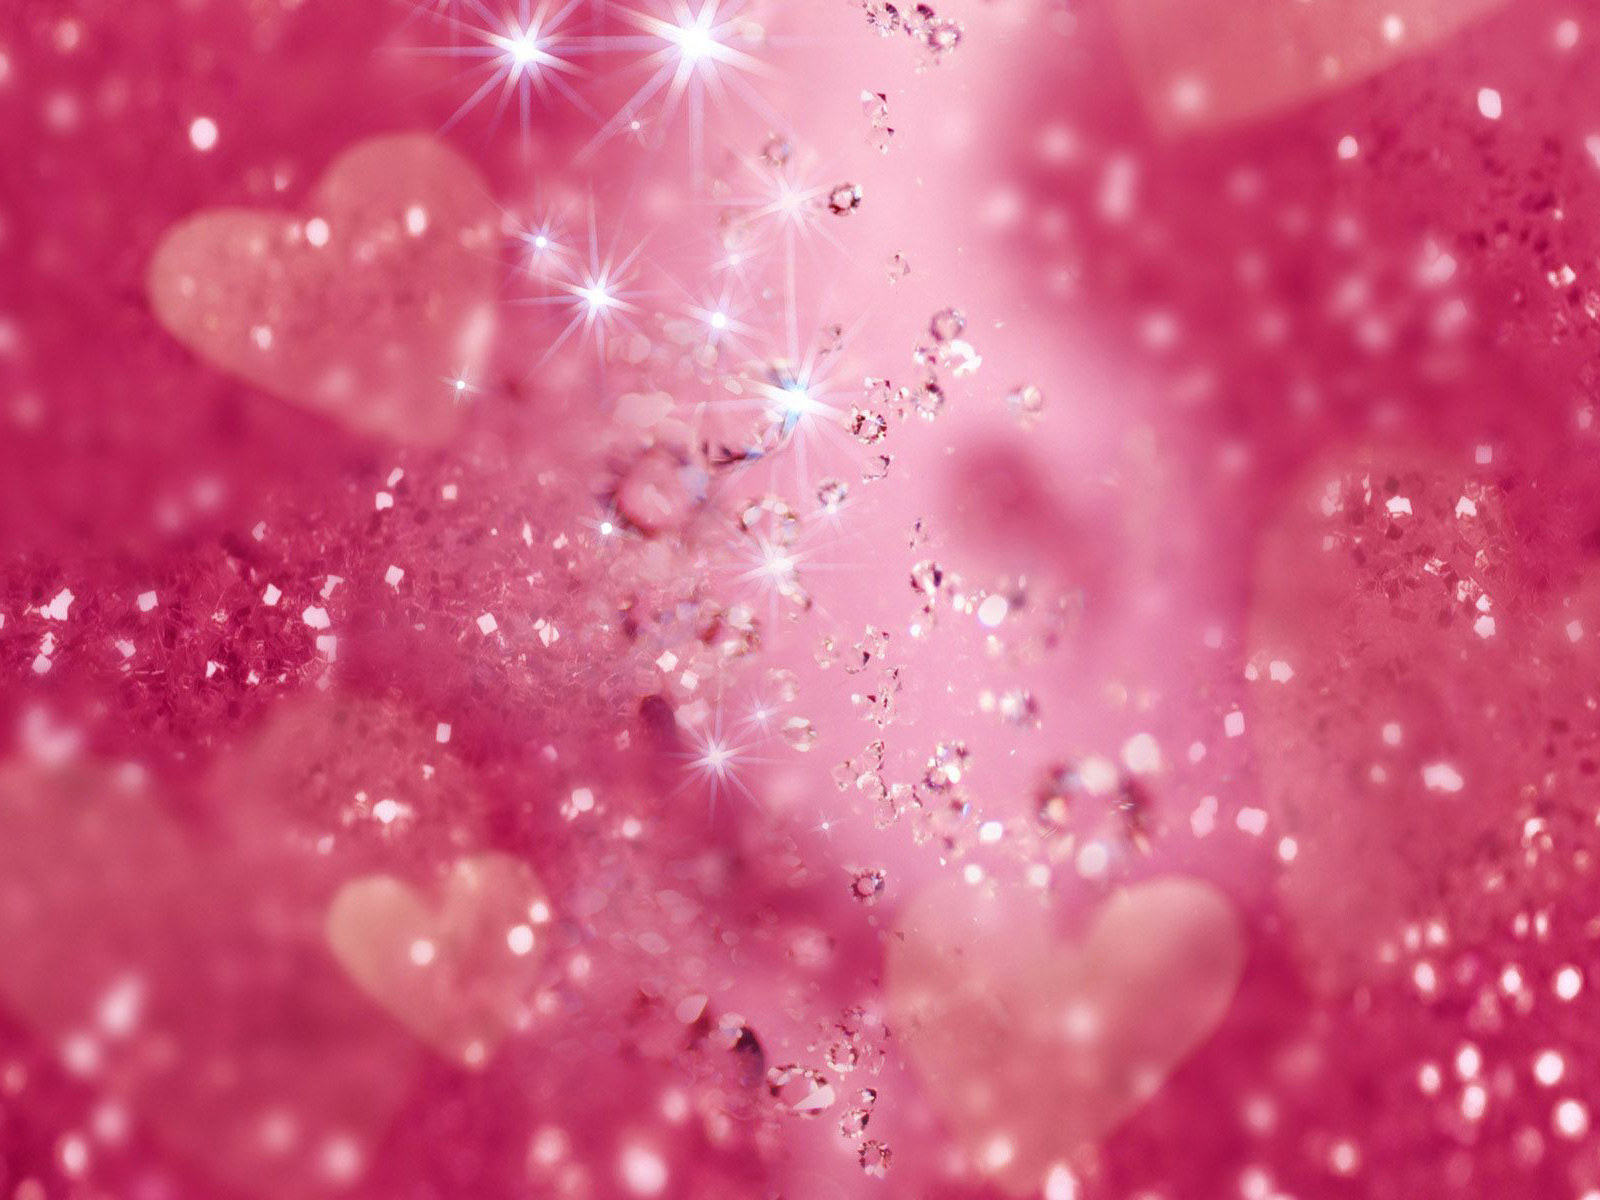 Cute Love Pink Full HD Wallpaper Picture Image Original Size